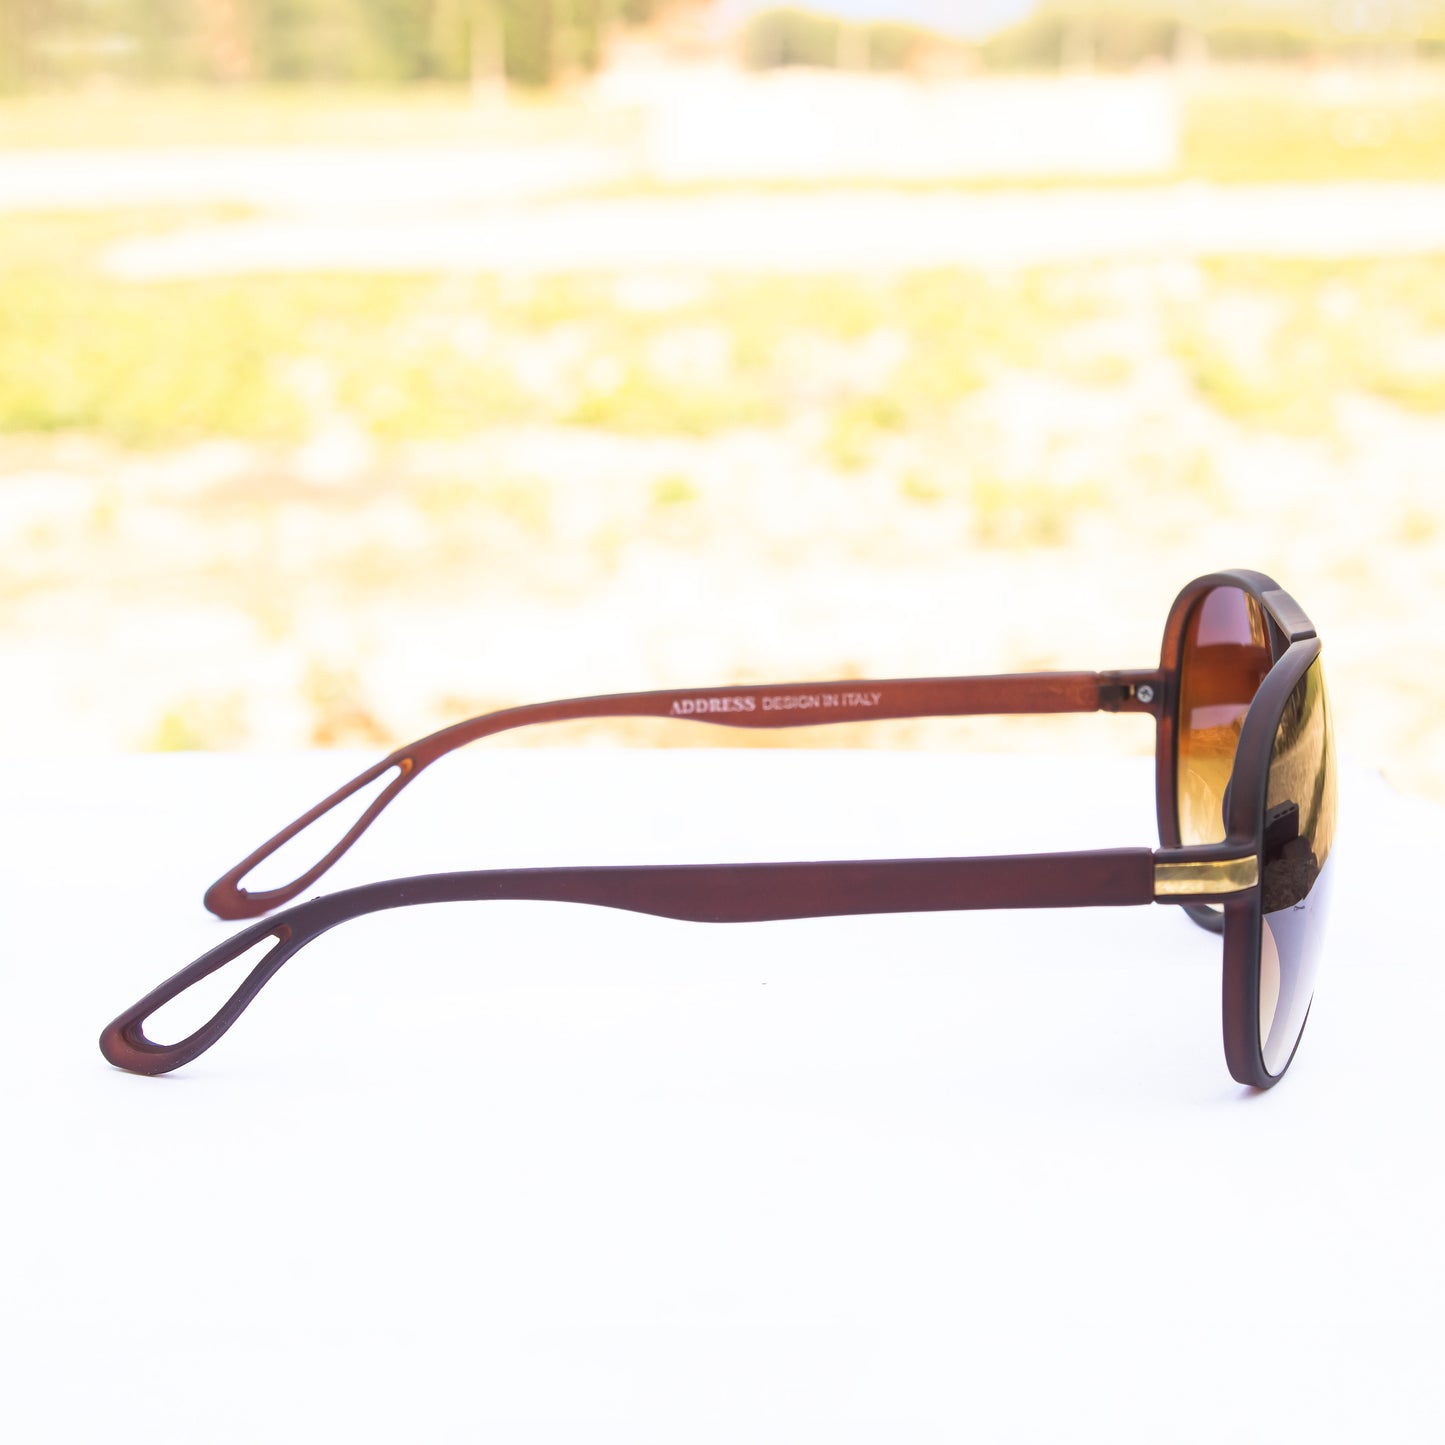 Jiebo UV Protection Aviator Sunglasses For Men, Brown